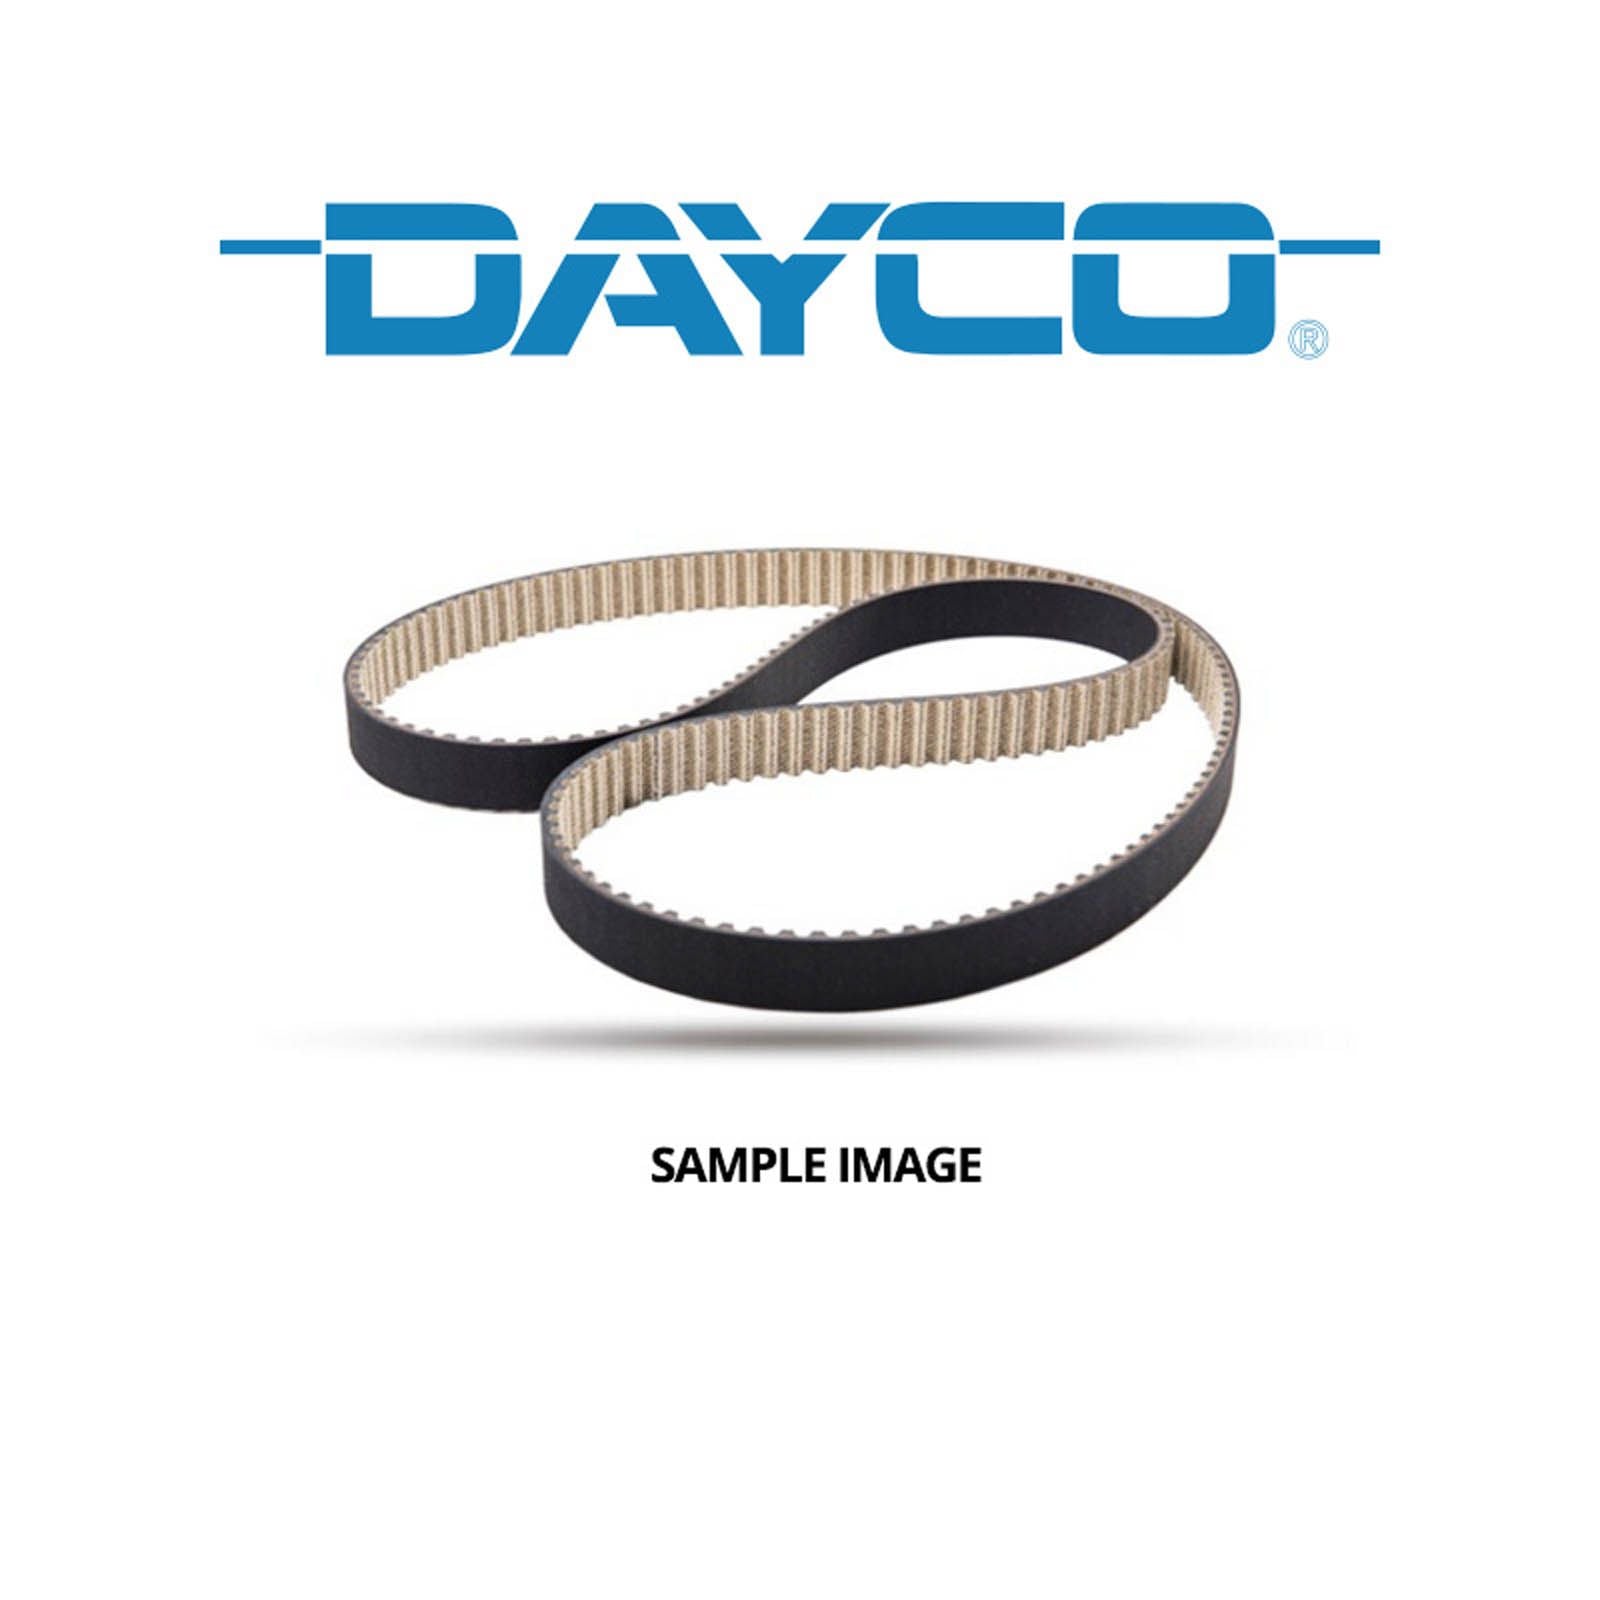 New DAYCO ATV Drive Belt HPX 29.0 X 844 HPX2217 #ATVDBHPX2217